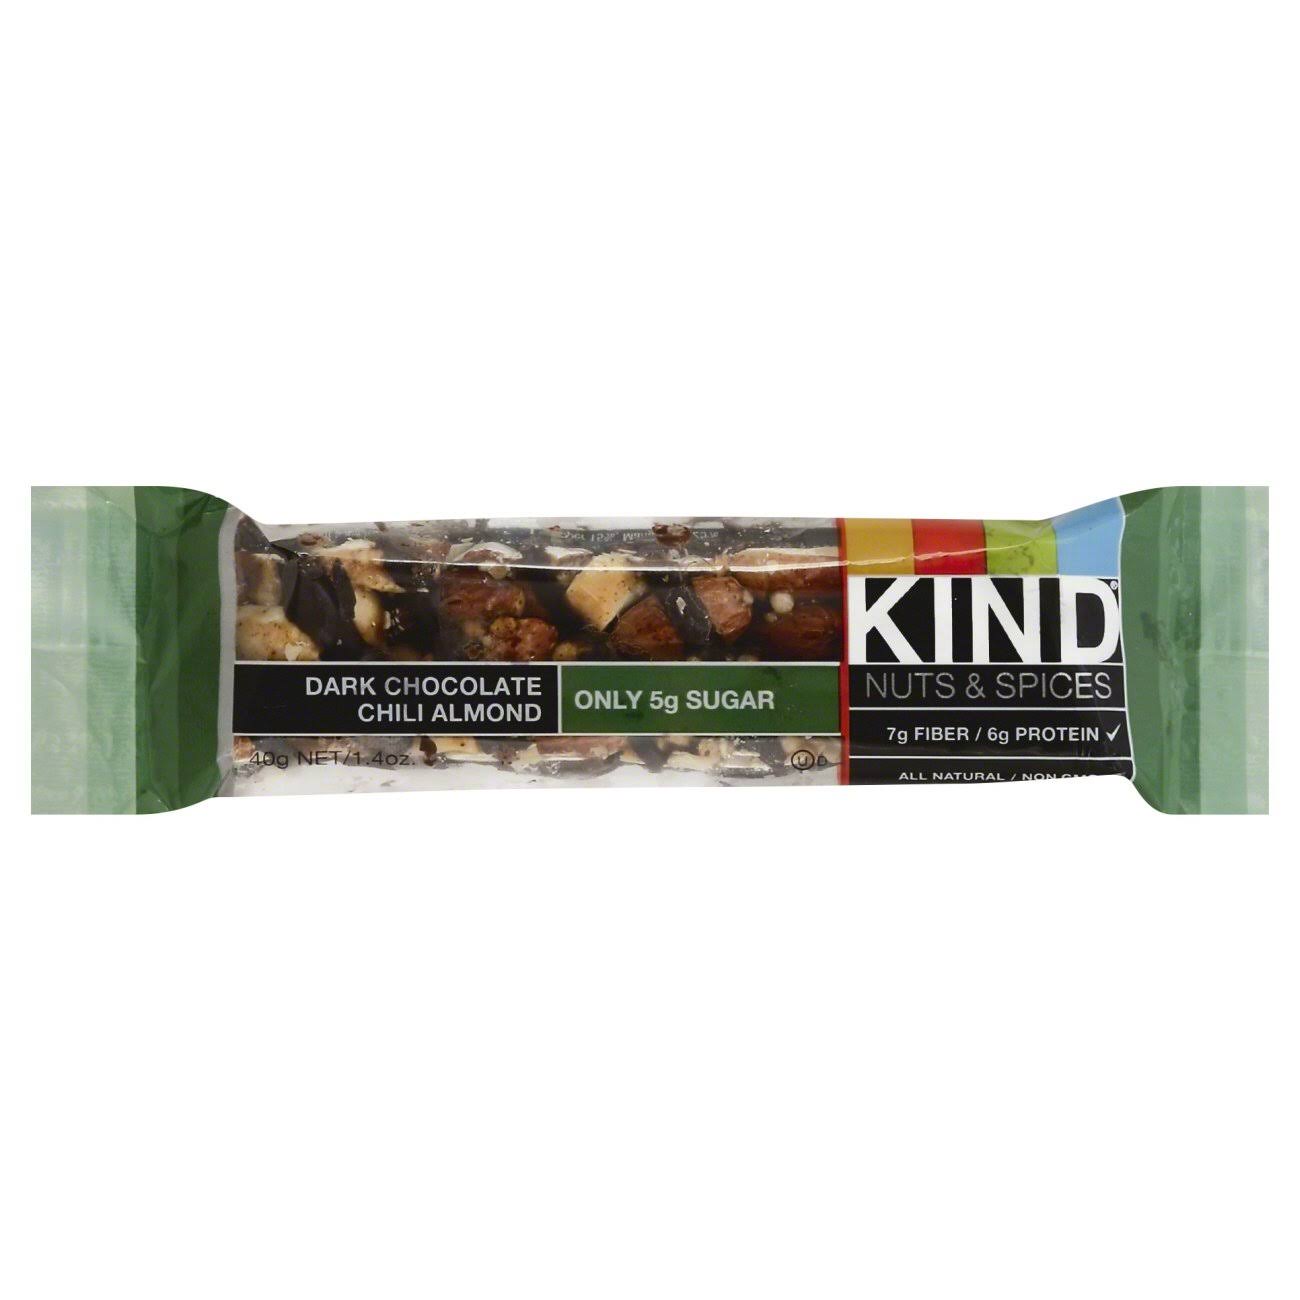 Kind Nuts & Spices Dark Chocolate Chili Almond Bar